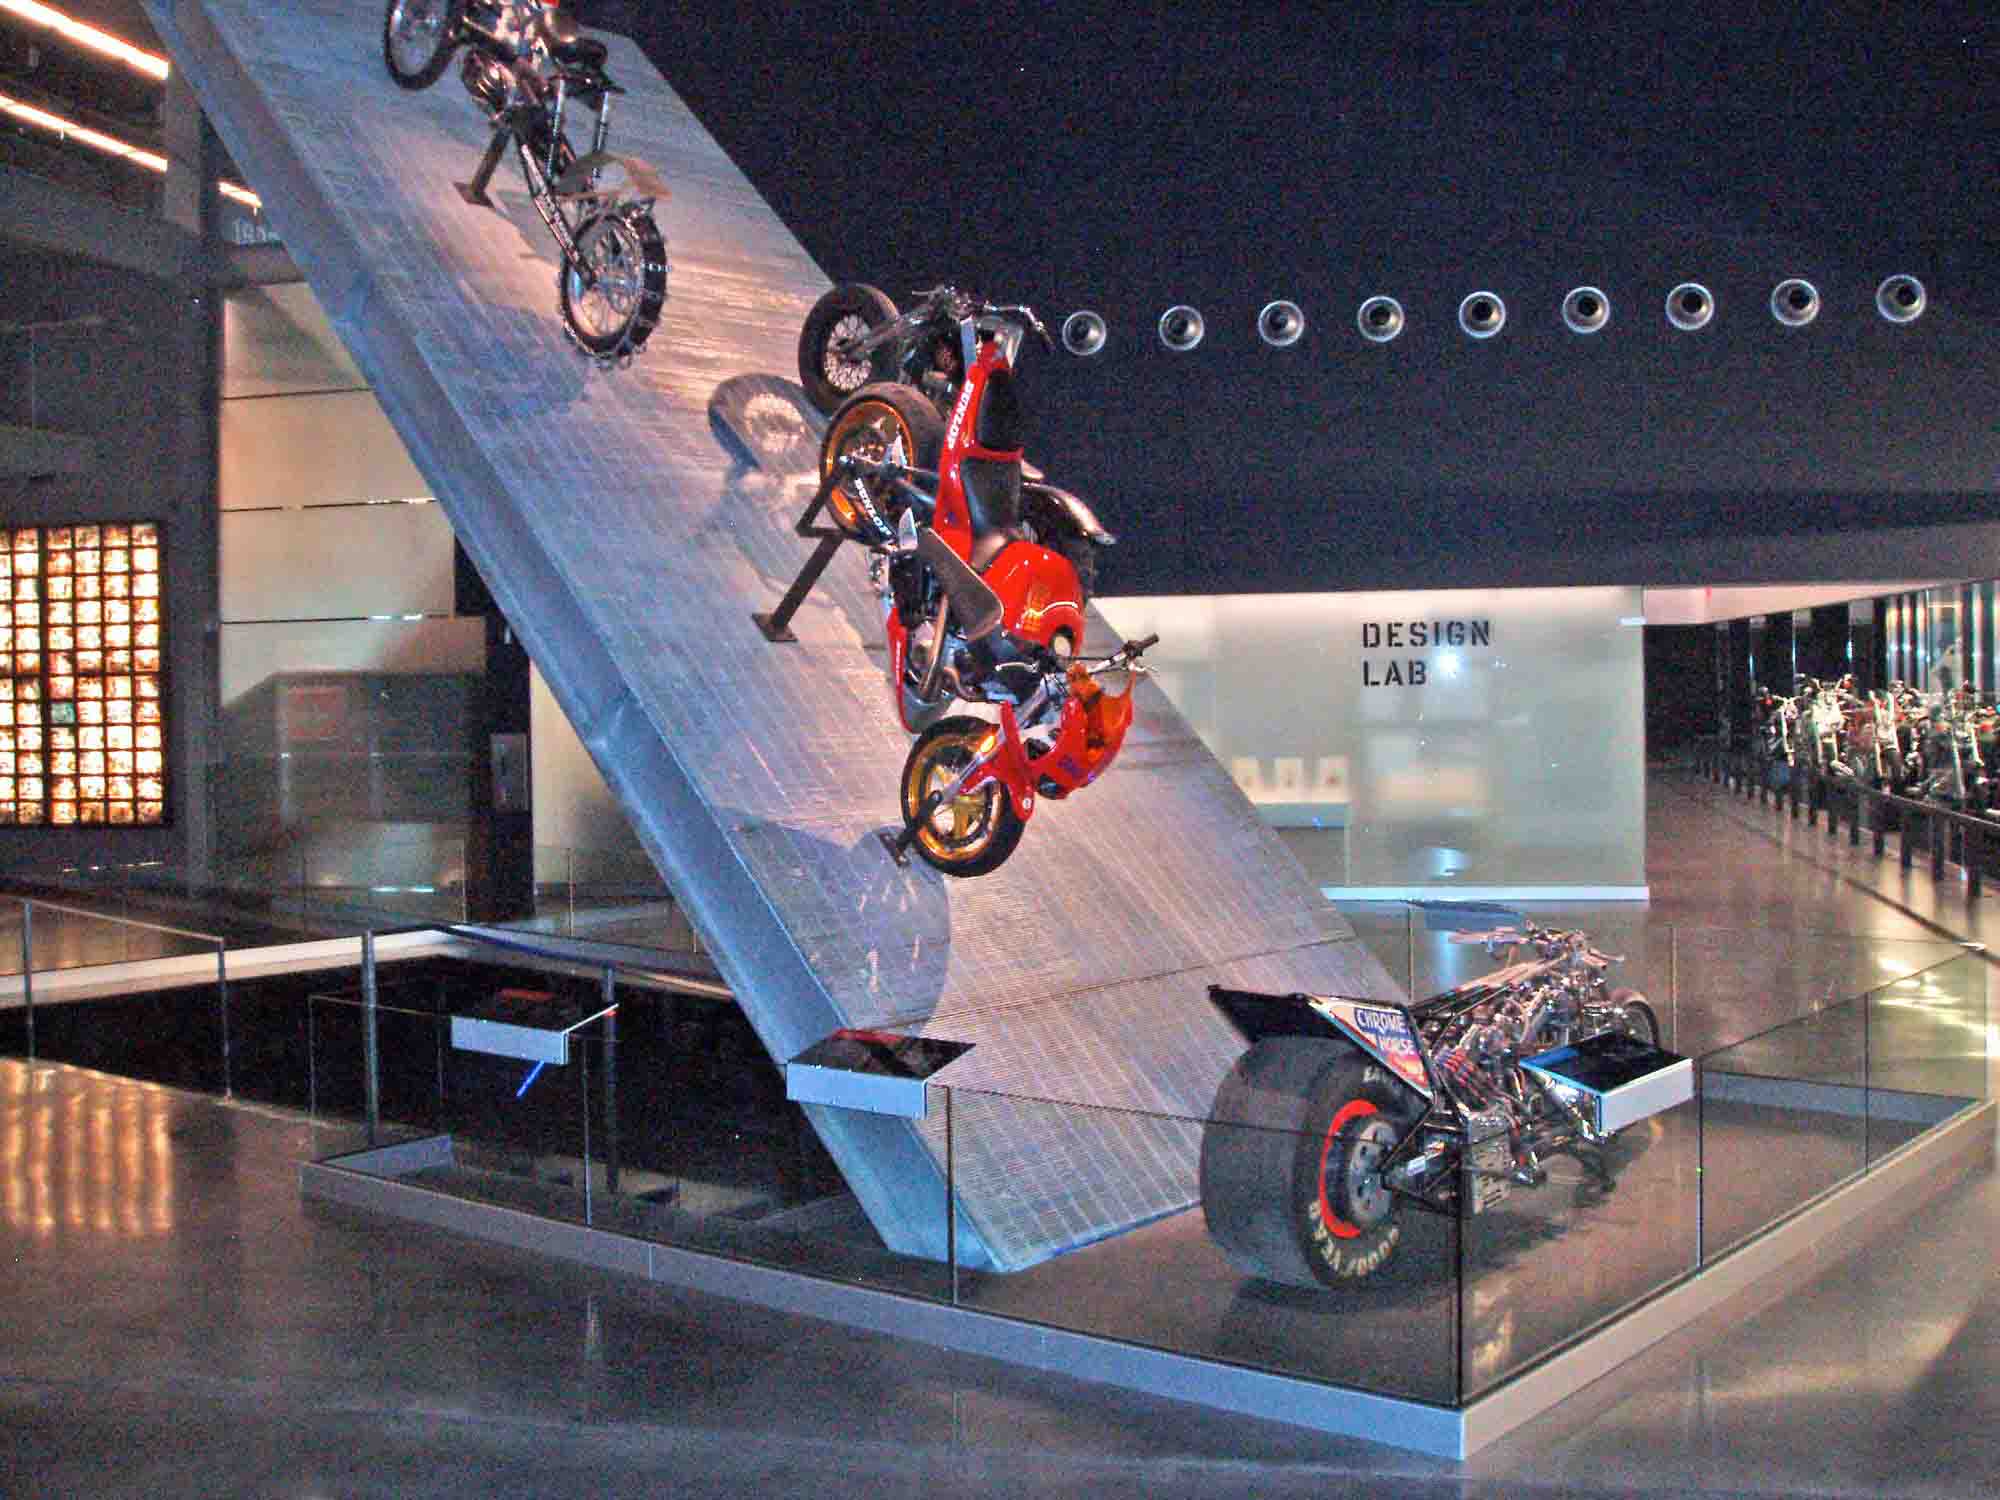 Bar Grating display inside the Harley-Davidson Museum.